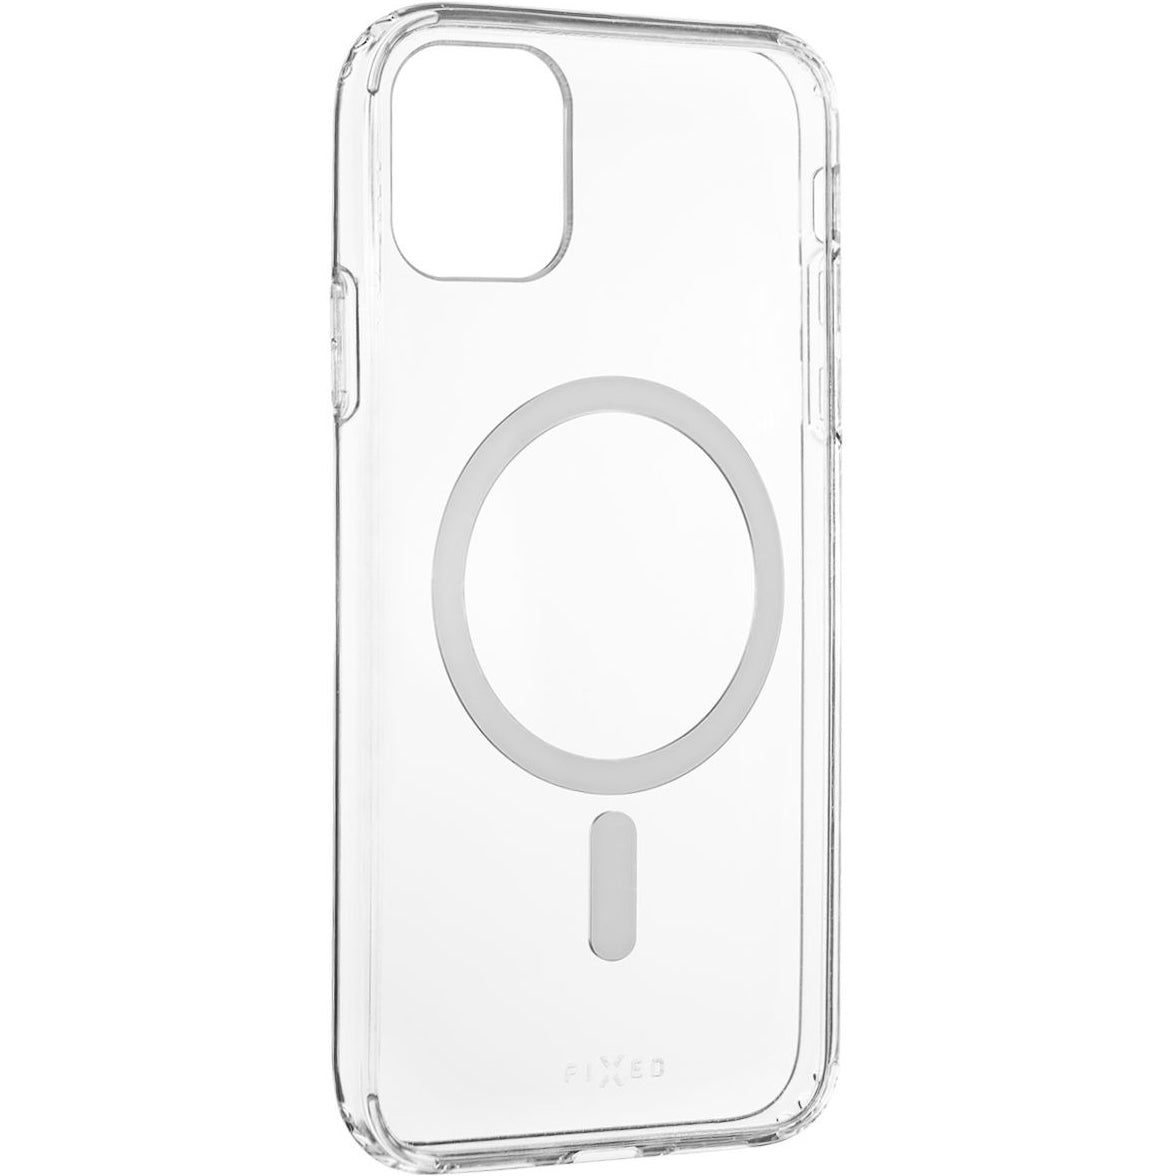 Schutzhülle Fixed MagPure MagSafe für iPhone 11, Transparent